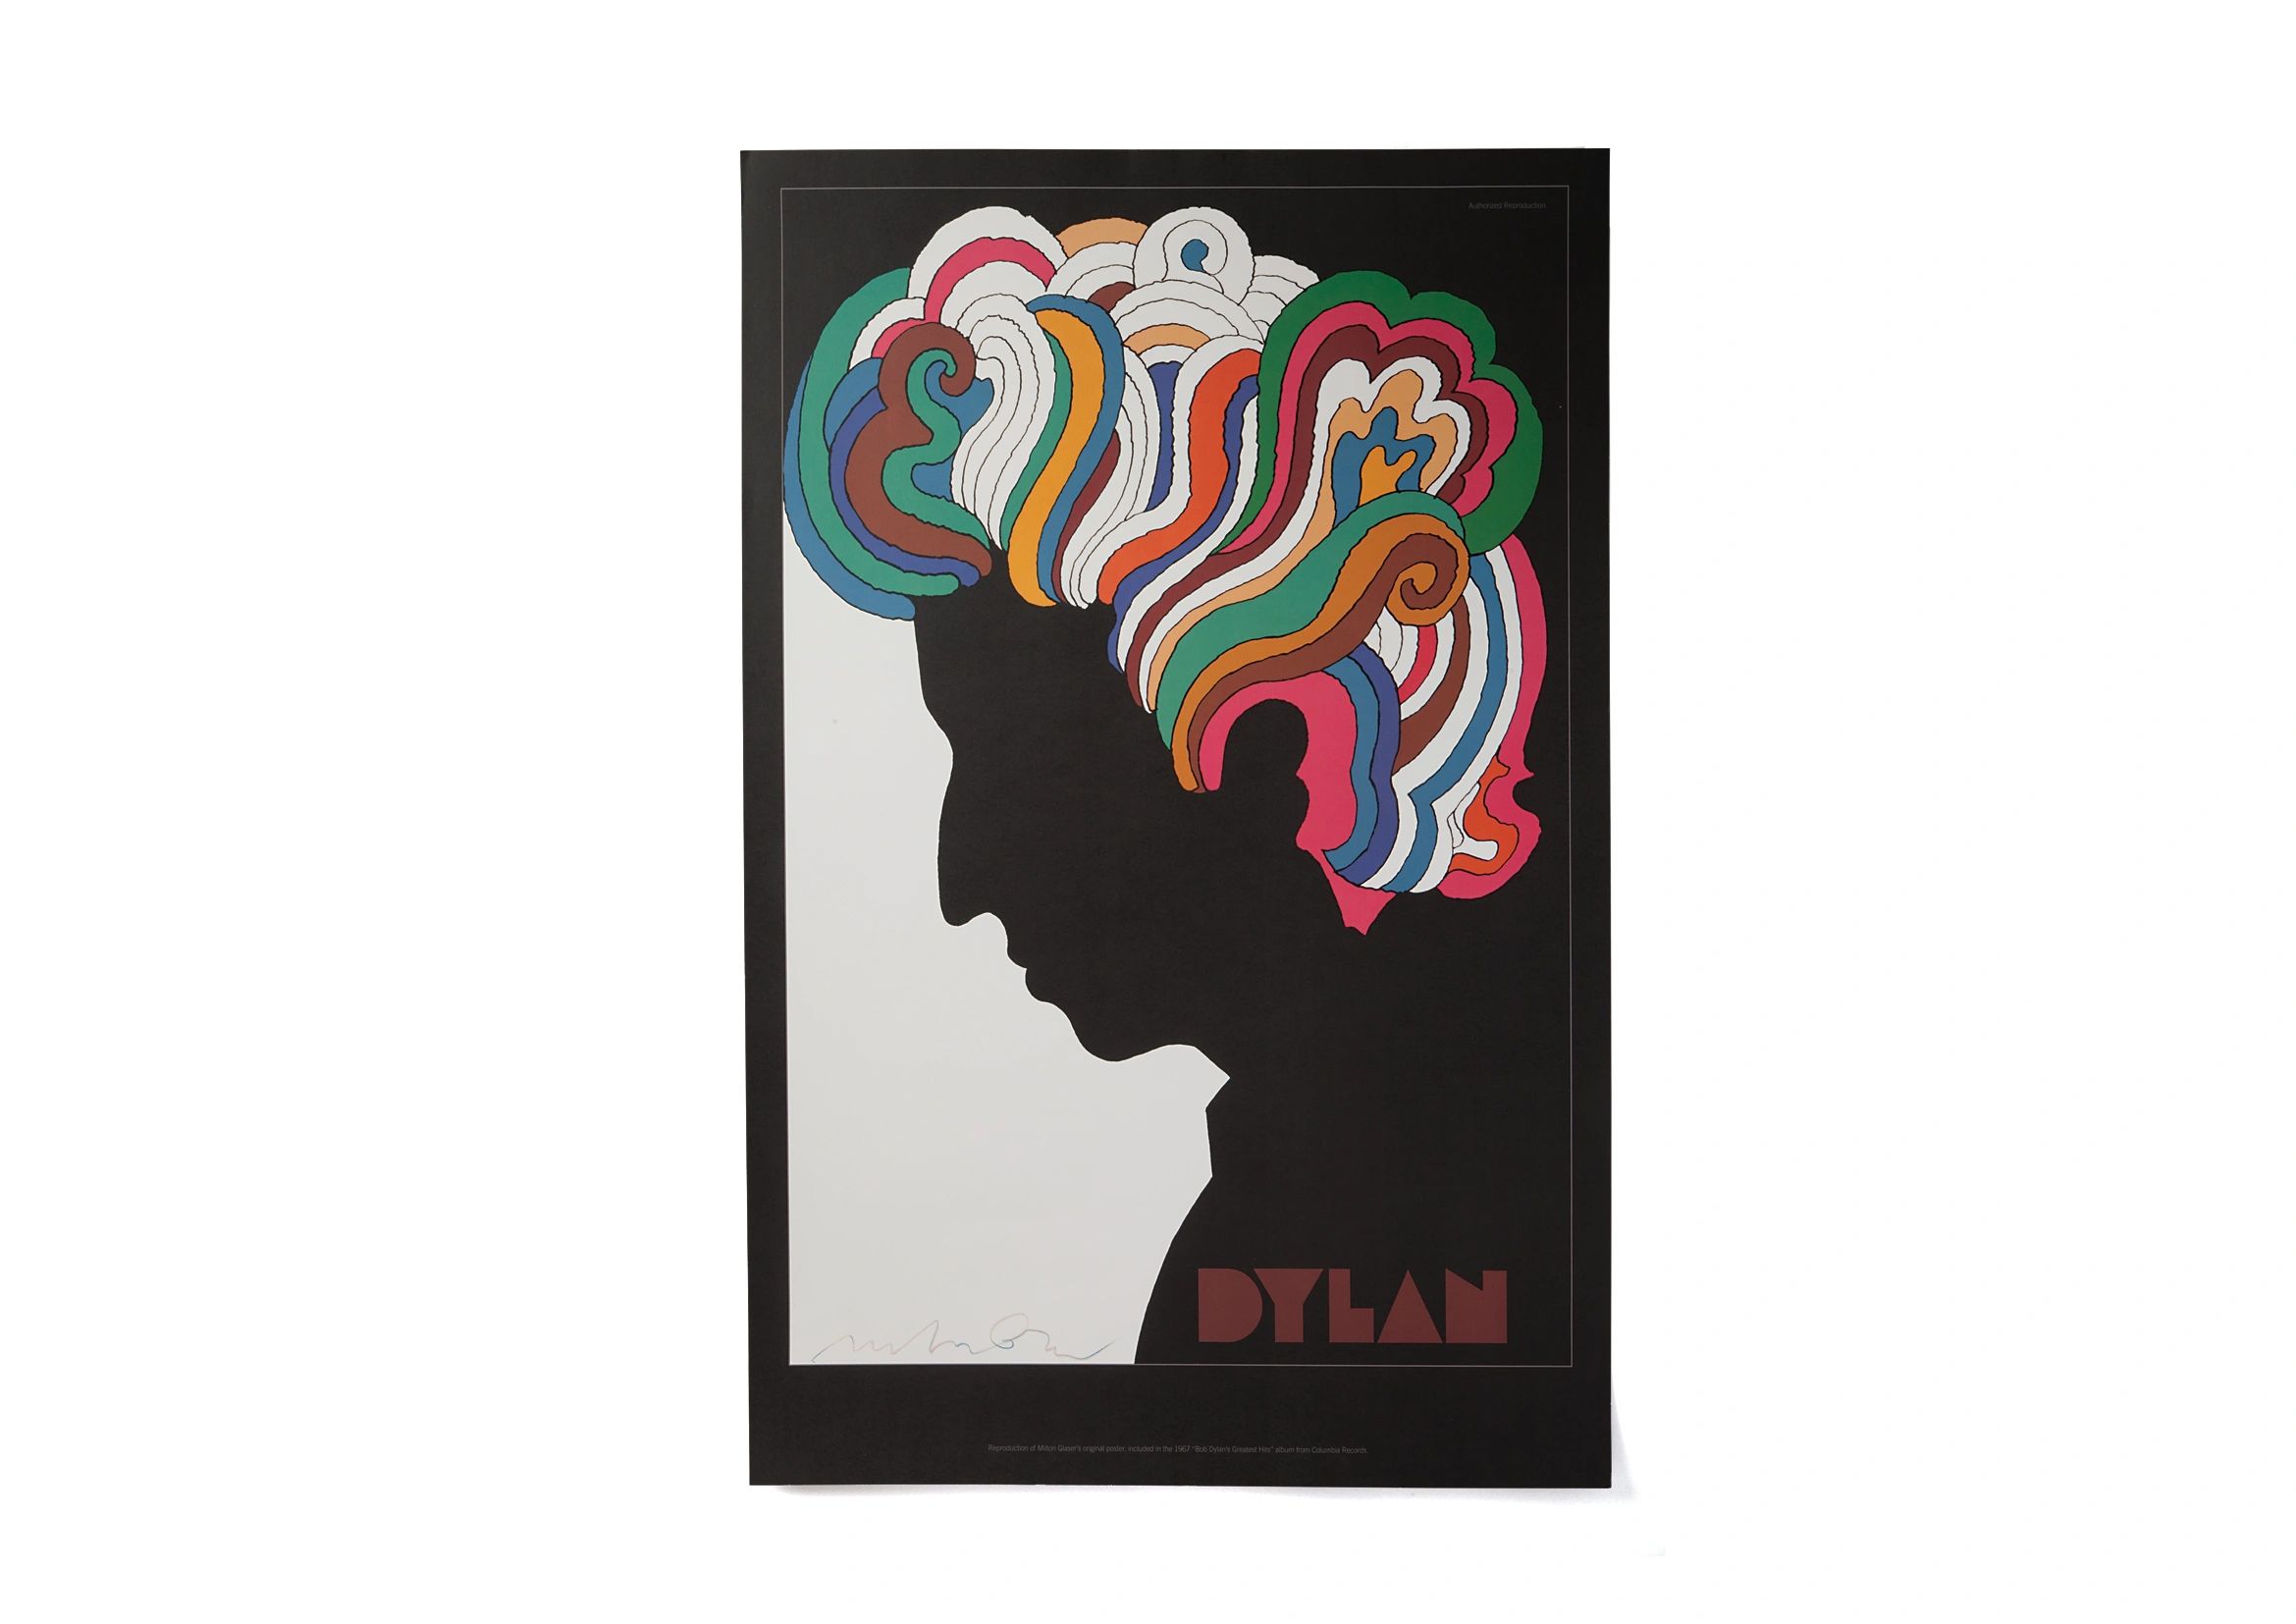 Bob Dylan Greatest Hits Poster / Milton Glaser
Gift of Mirko Ilić
Studio visit - E 32 St, NYC / 2018